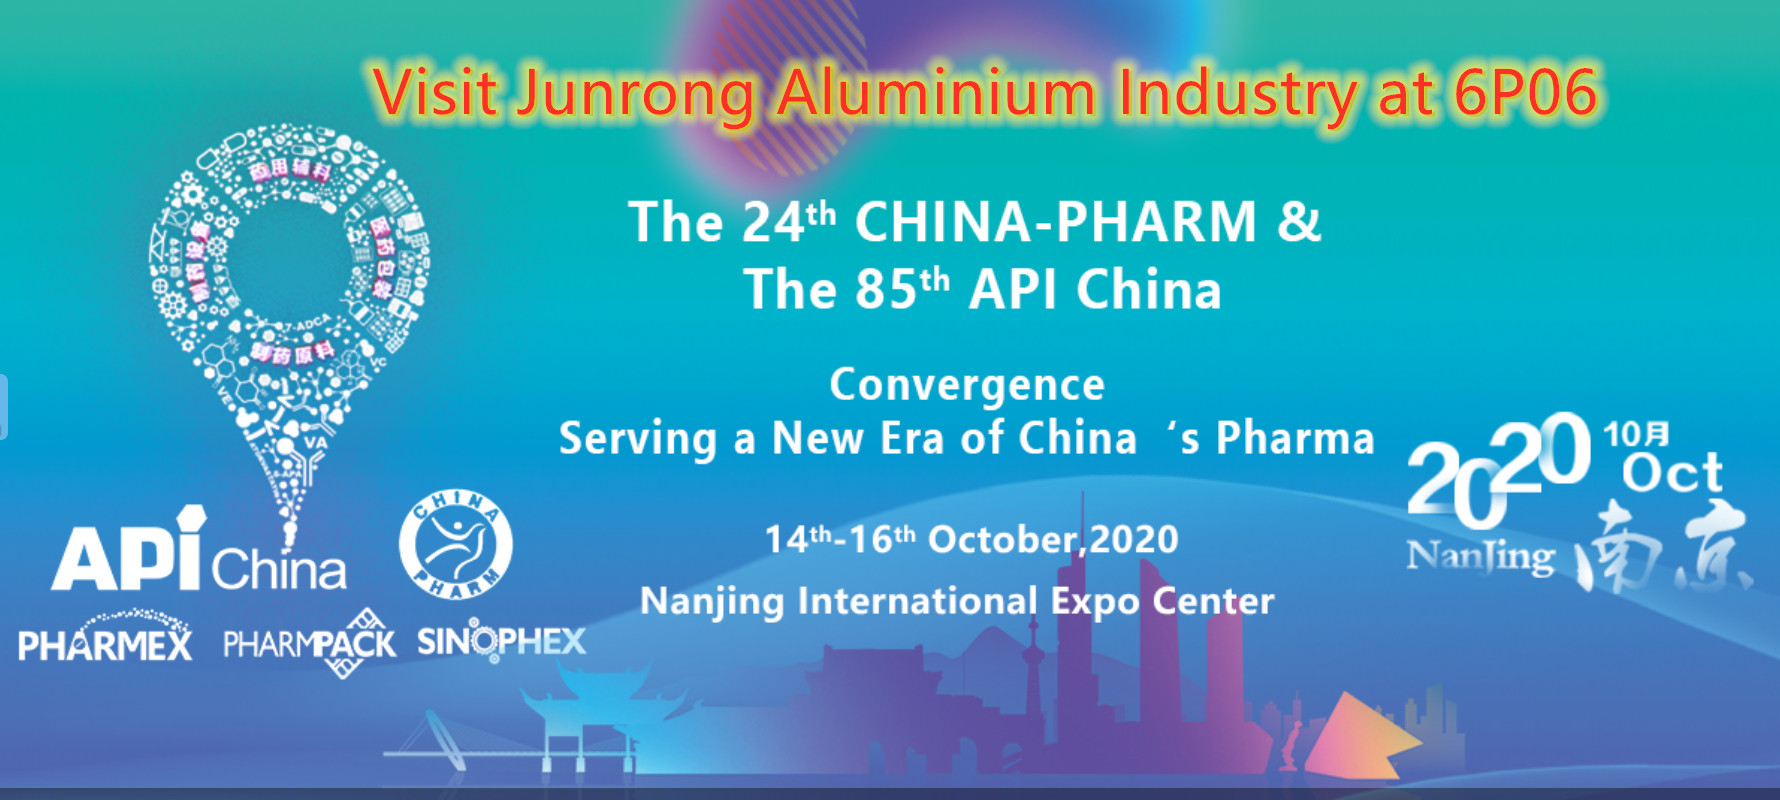 Welcome to visit Tangshan Junrong Aluminium Industry at the 85th API China